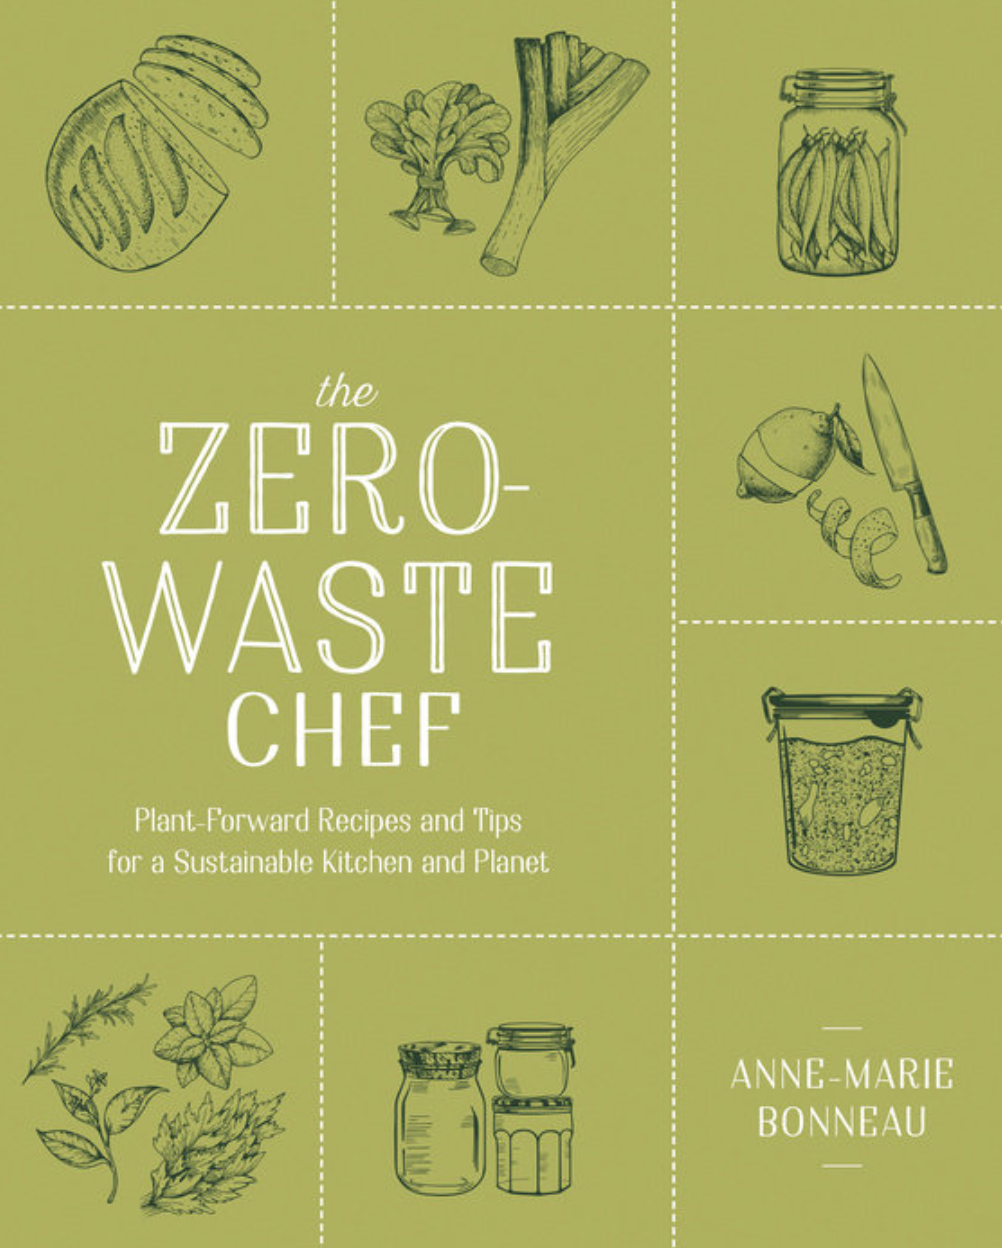 The Zero Waste Chef by Anne-Marie Bonneau